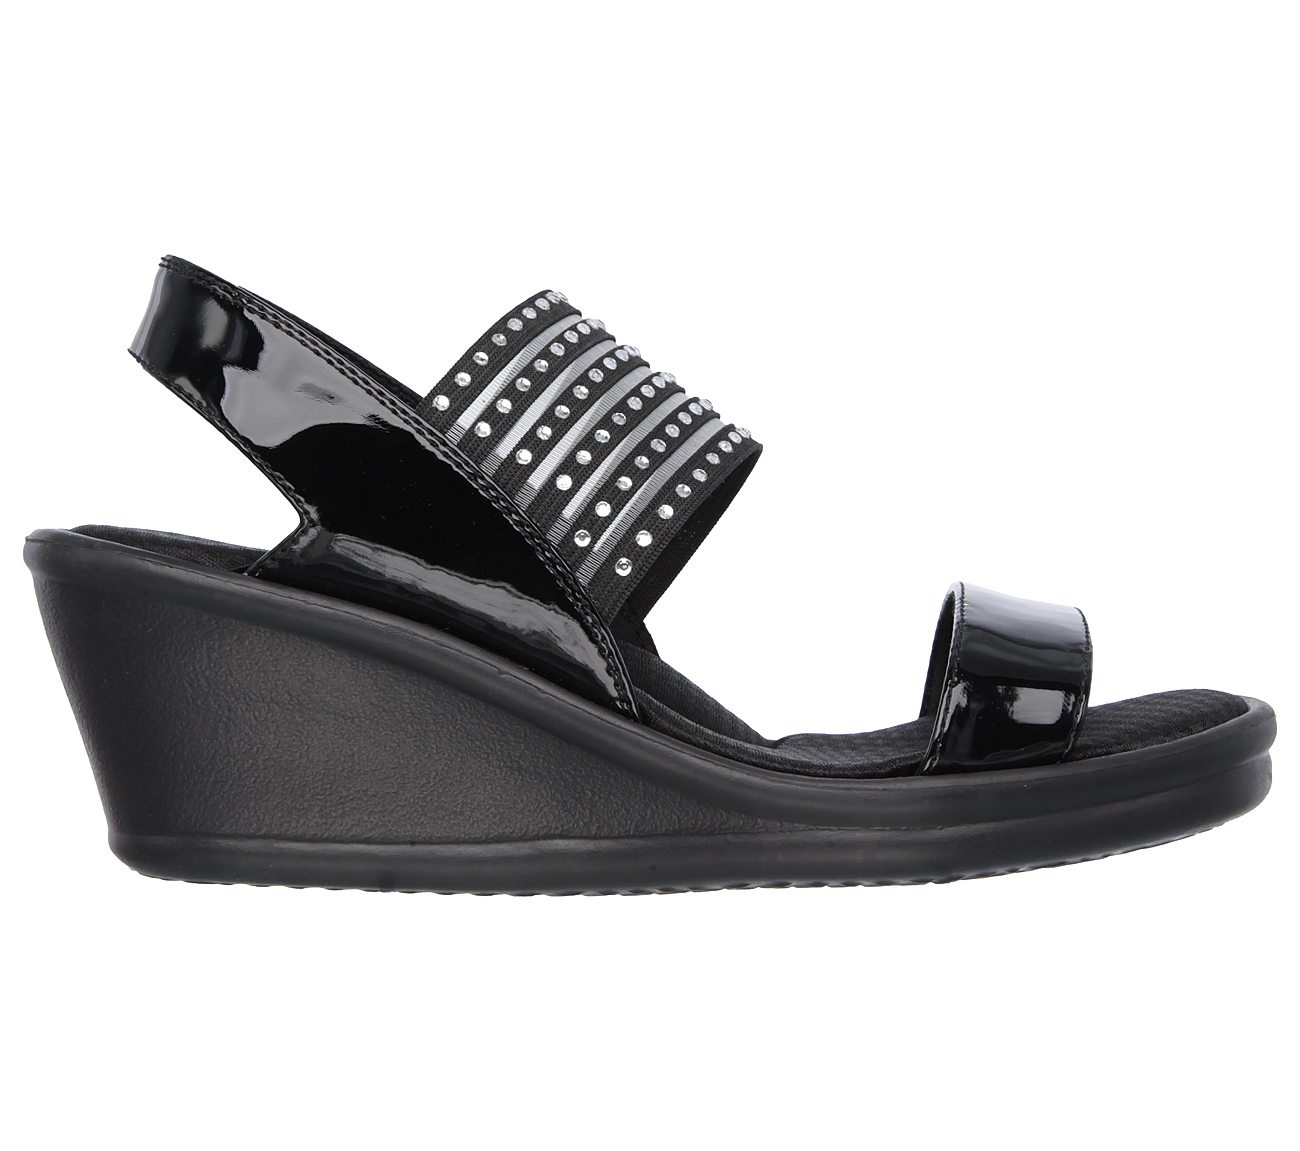 Buy SKECHERS Rumblers - Rock Solid Slide Sandals Shoes